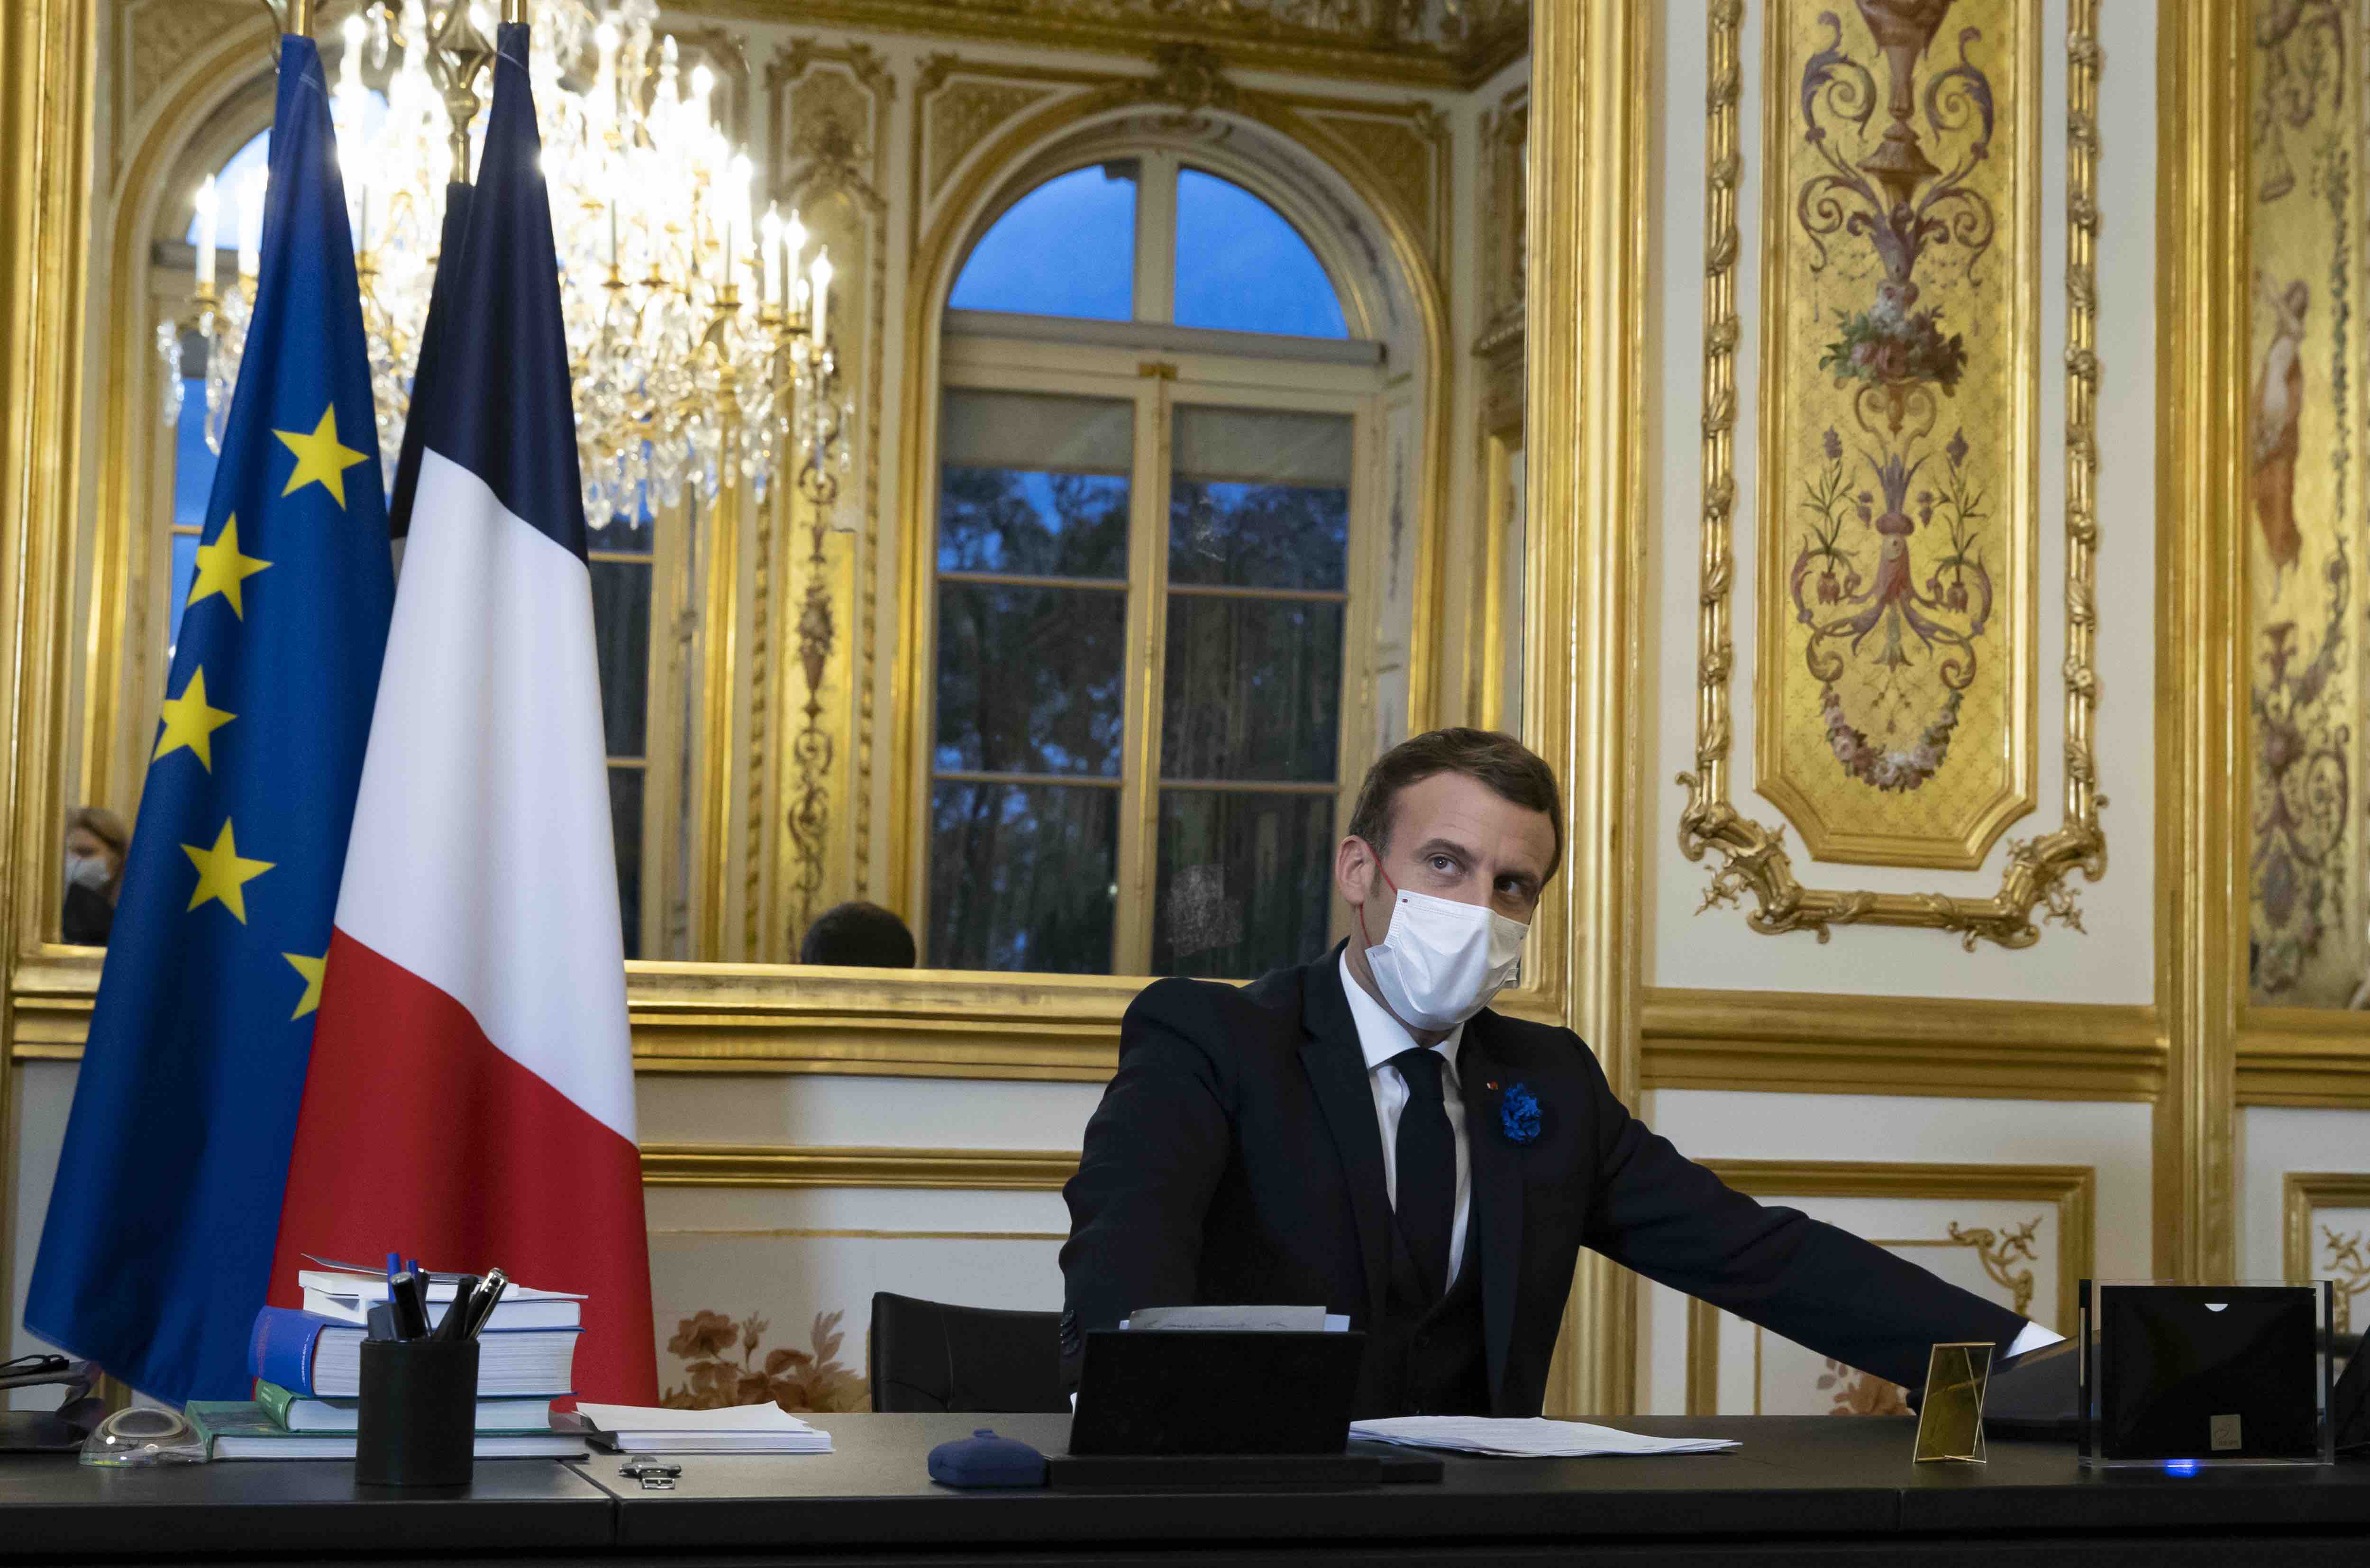 20201120-image-dpa-morning briefing-Macron